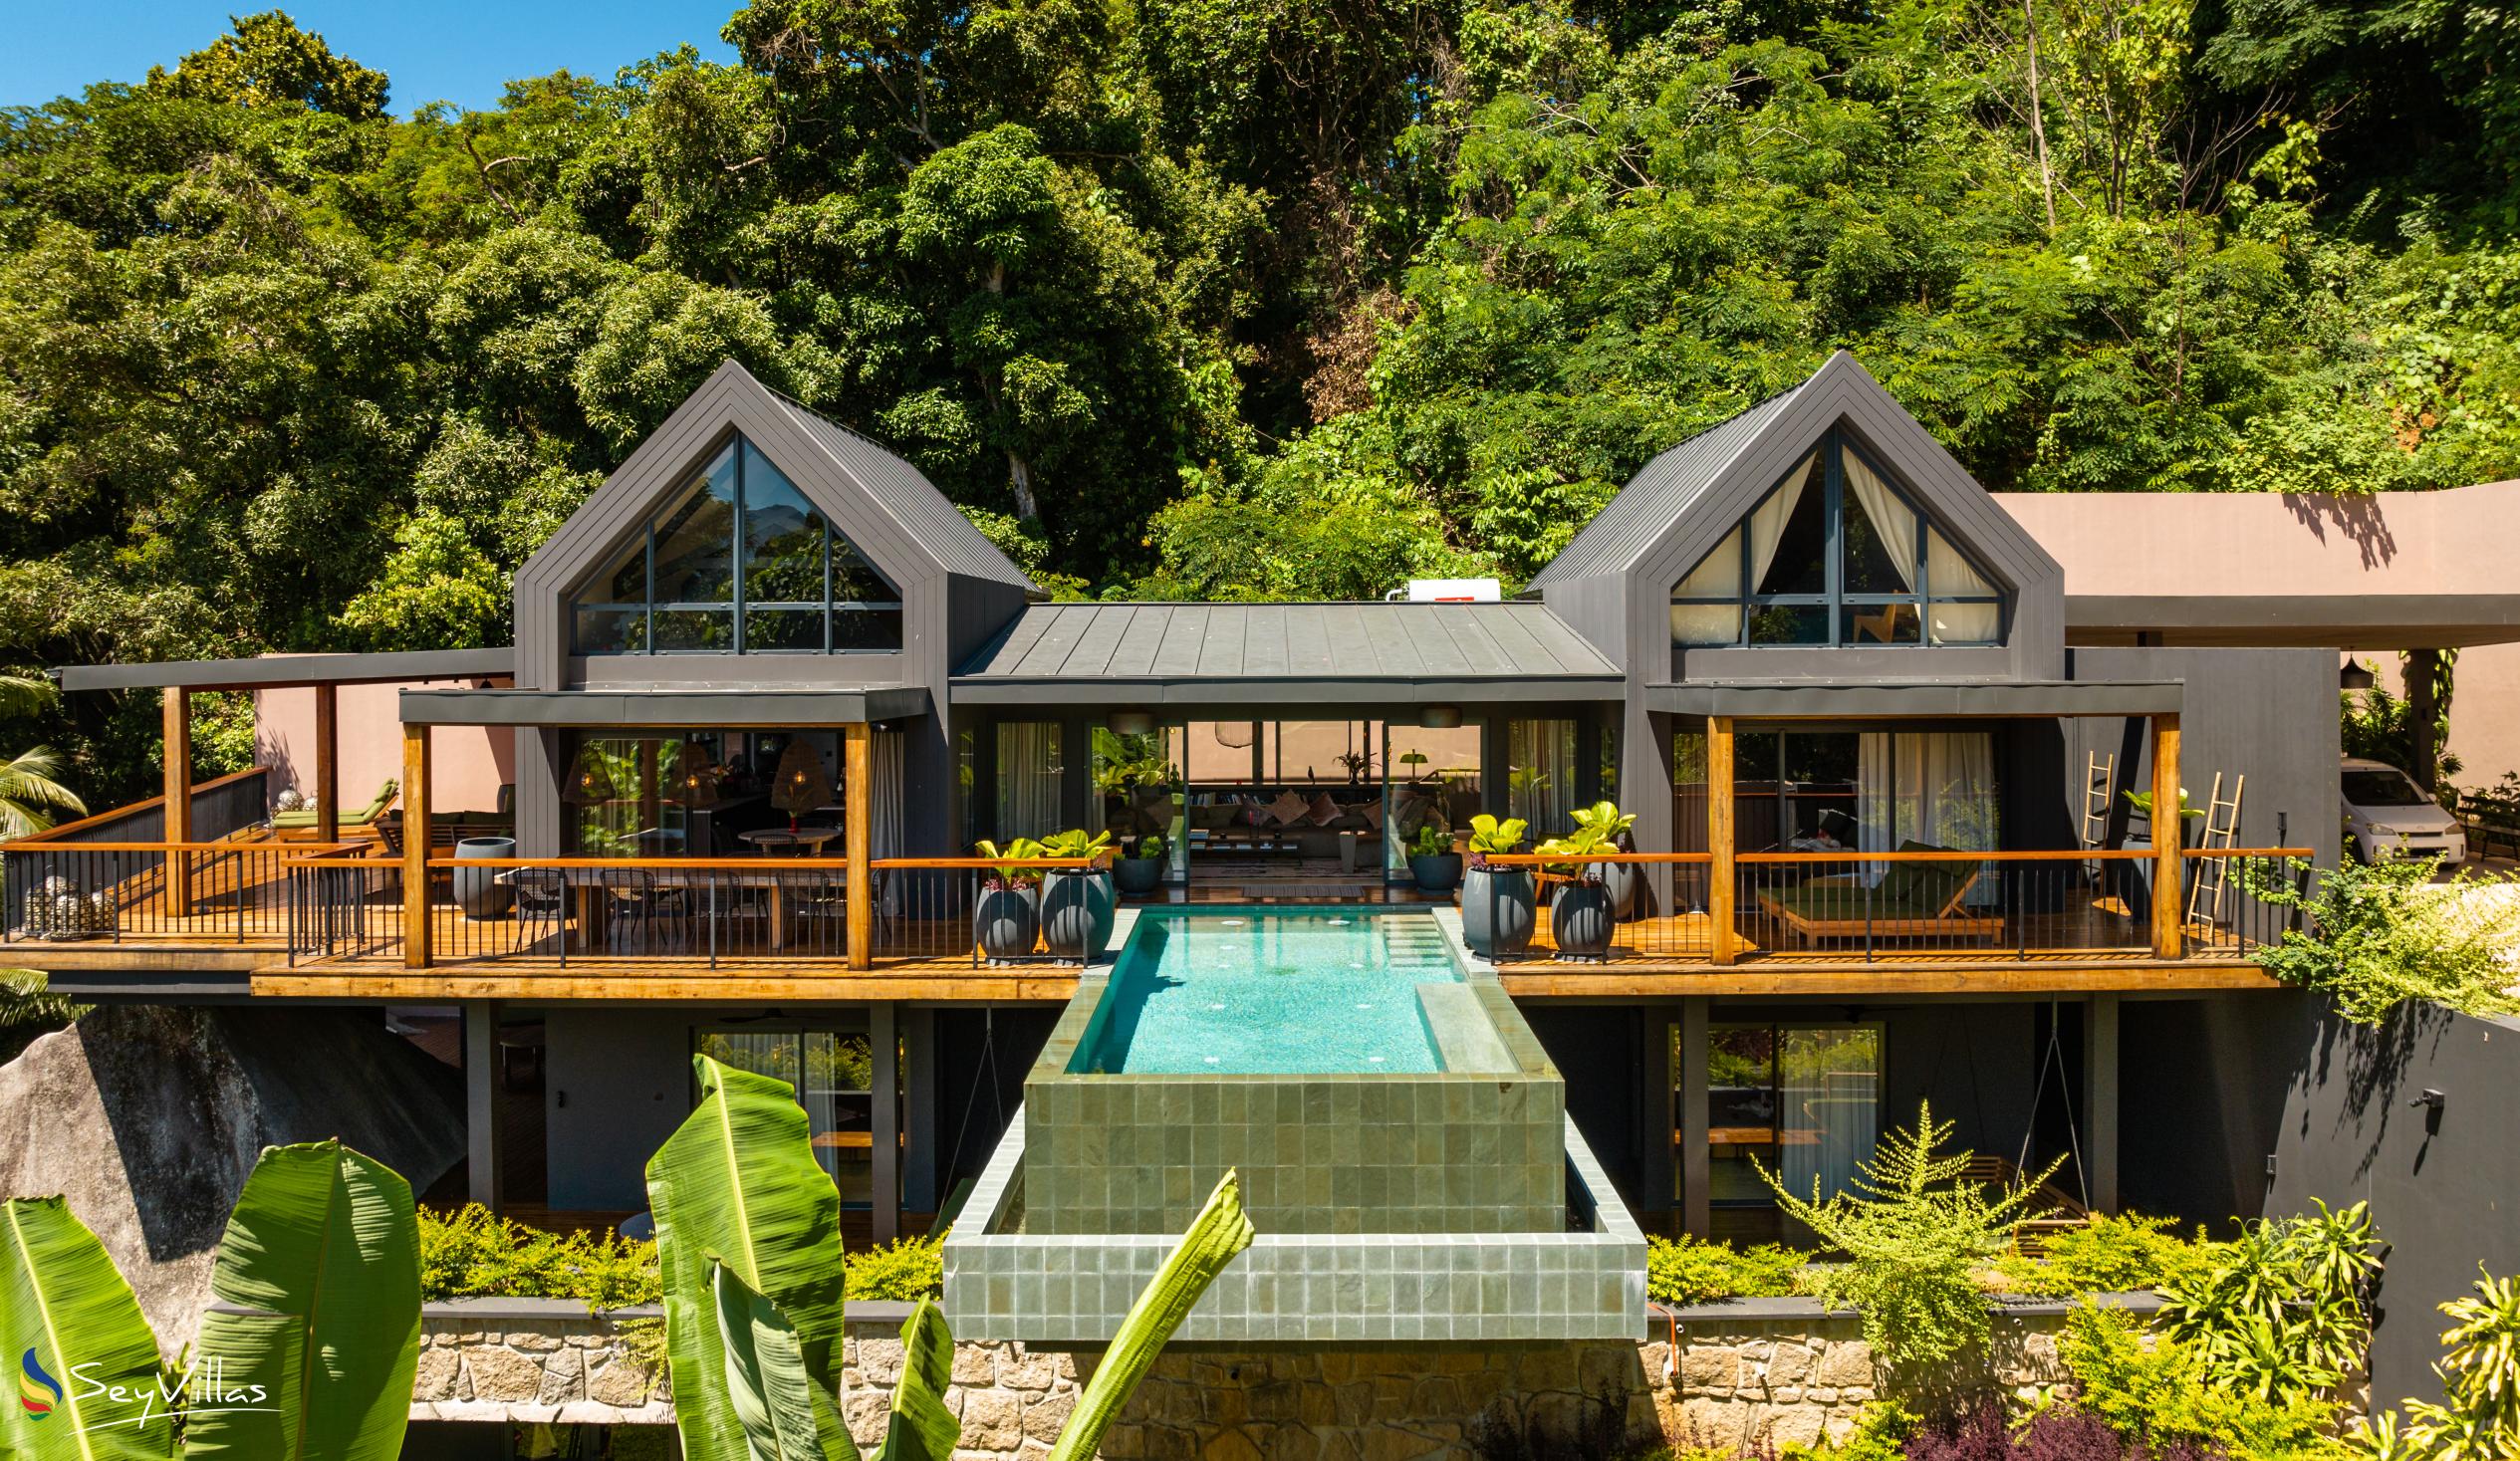 Photo 9: Maison Gaia - Outdoor area - Mahé (Seychelles)